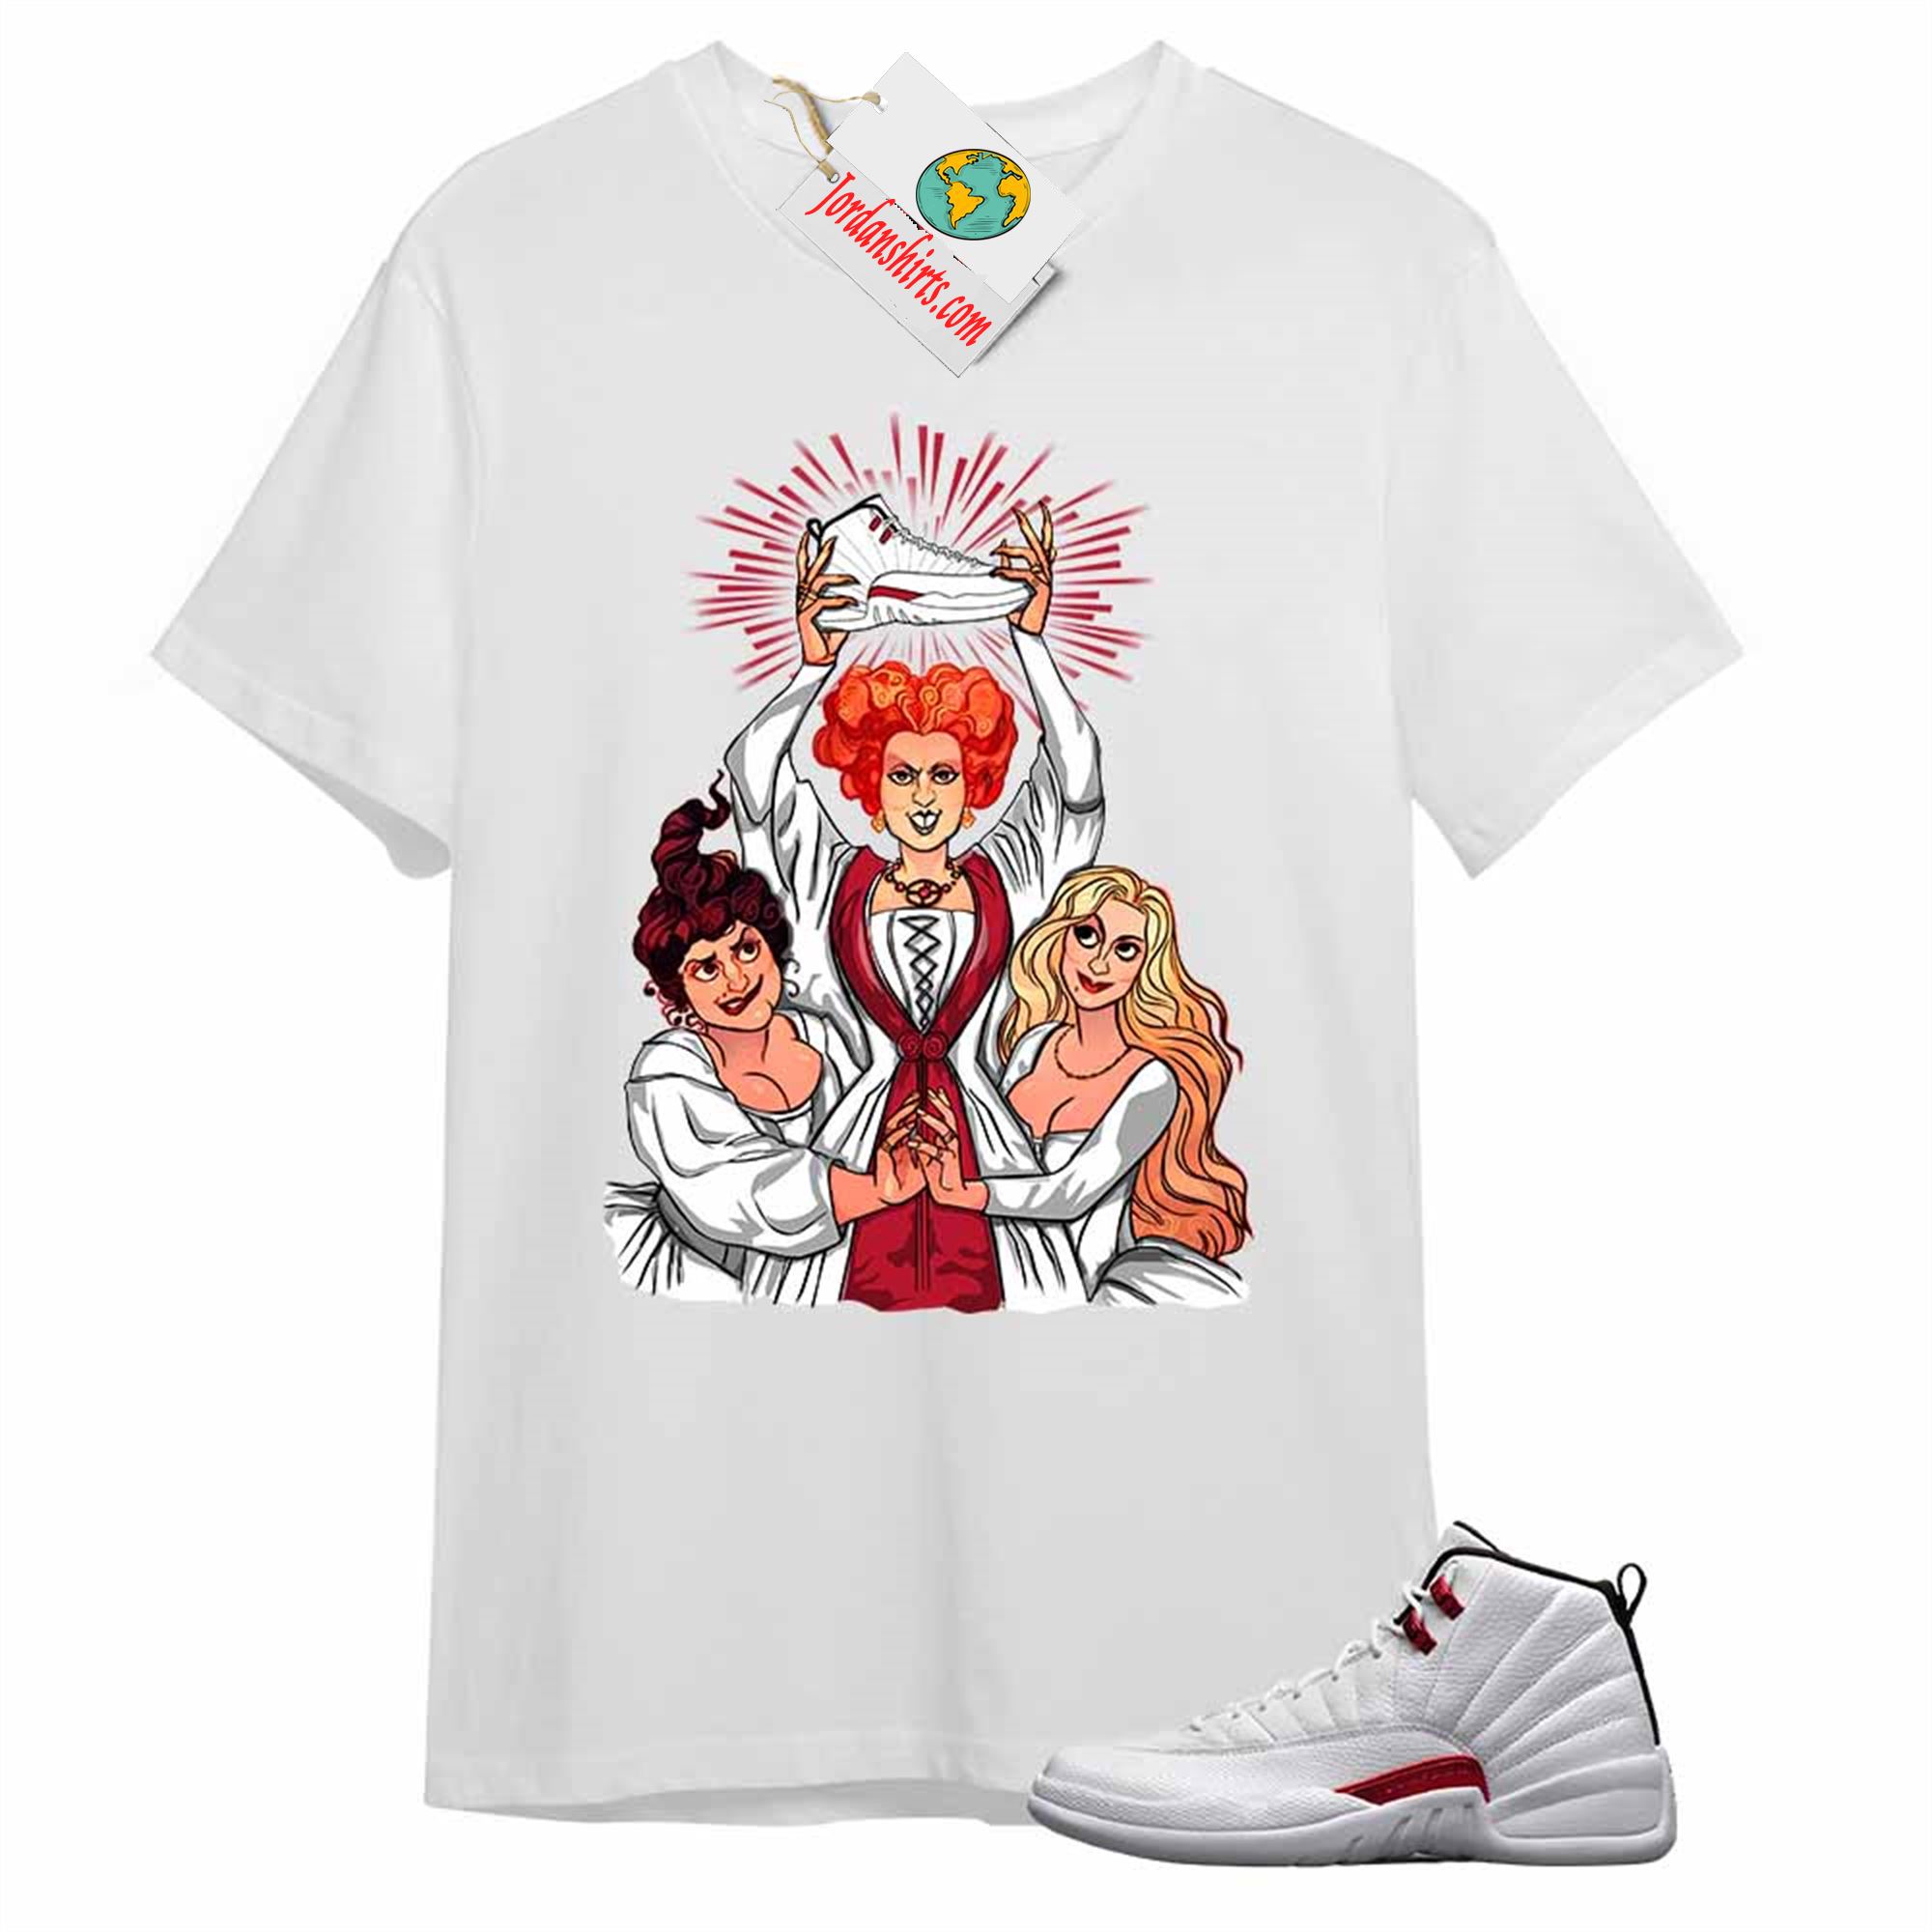 Jordan 12 Shirt, Hocus Pocus Witch White T-shirt Air Jordan 12 Twist 12s Plus Size Up To 5xl